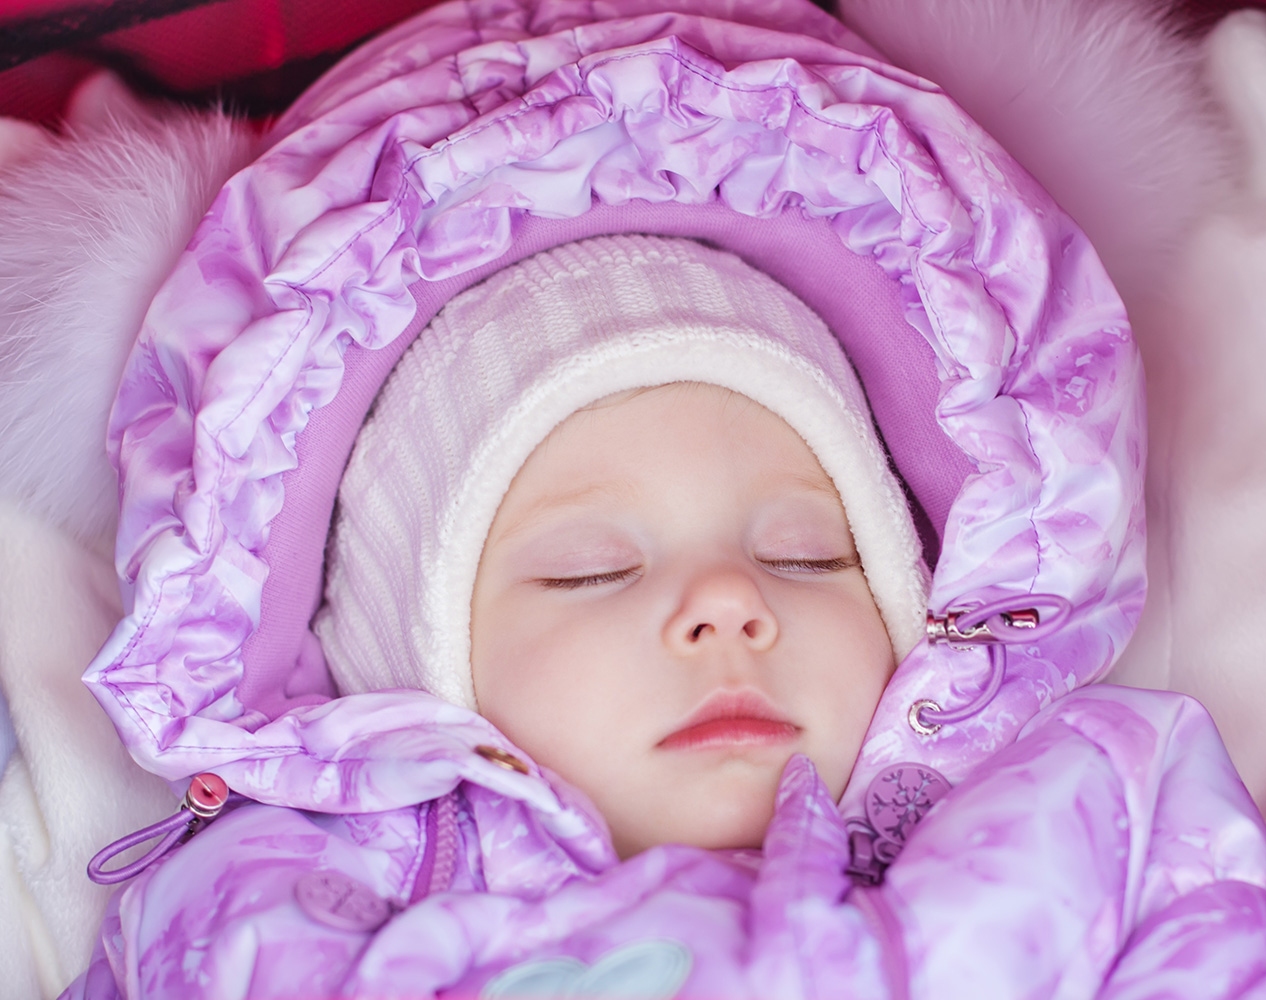 kobling vente Encommium Sover din baby udenfor? - Børn og Fritid